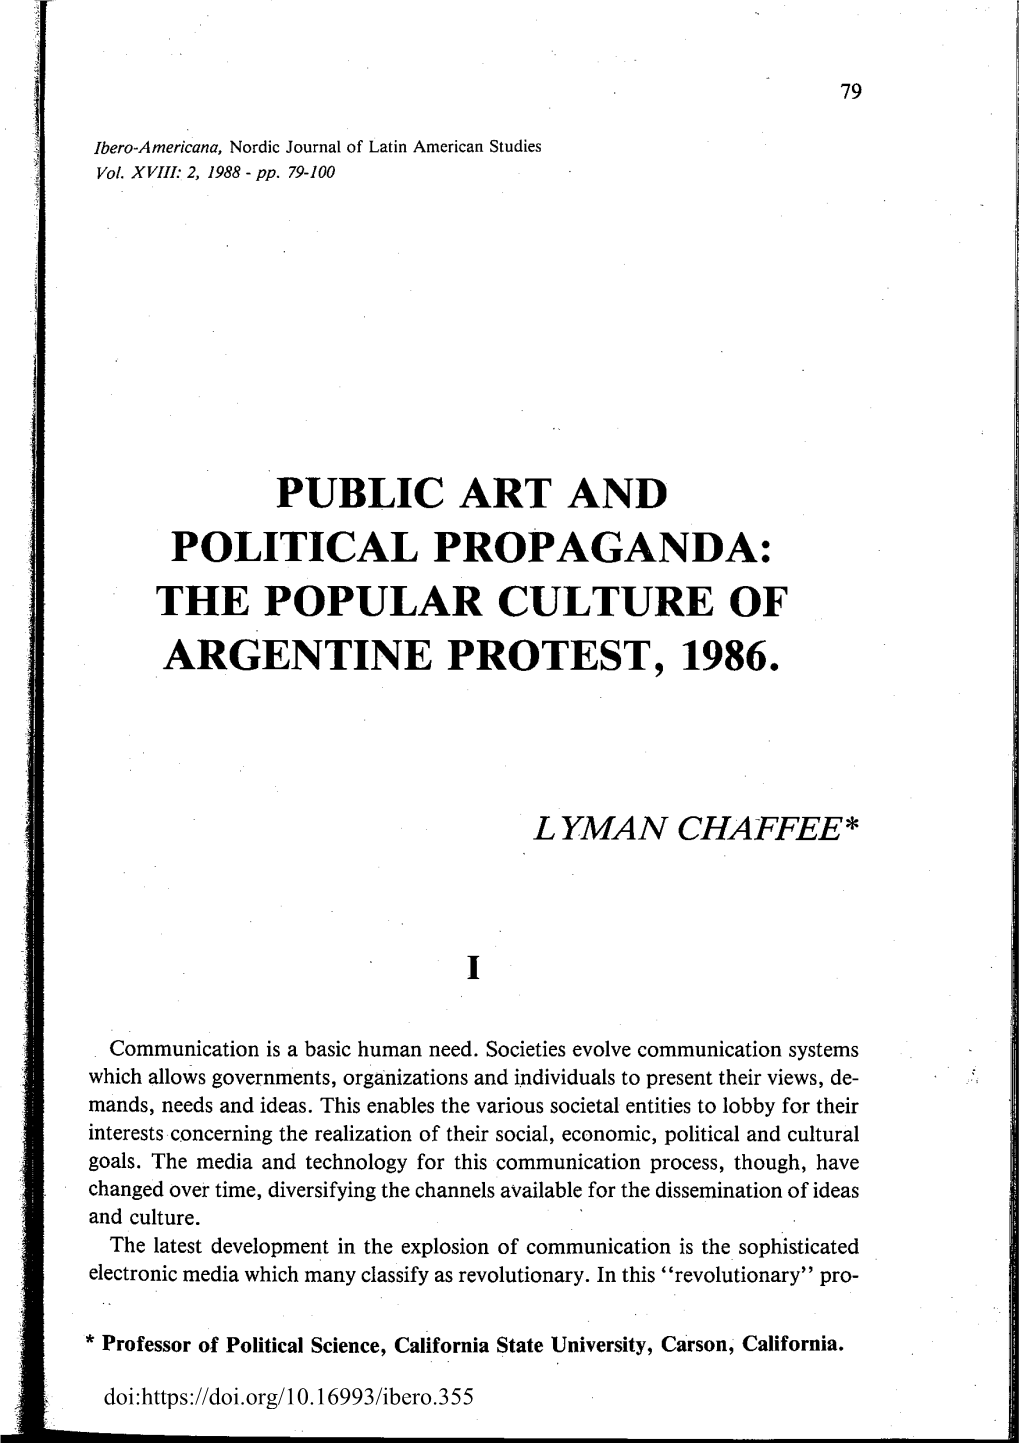 Public Art and Political Propaganda: the Popular Culture of Argentine Protest, 1986